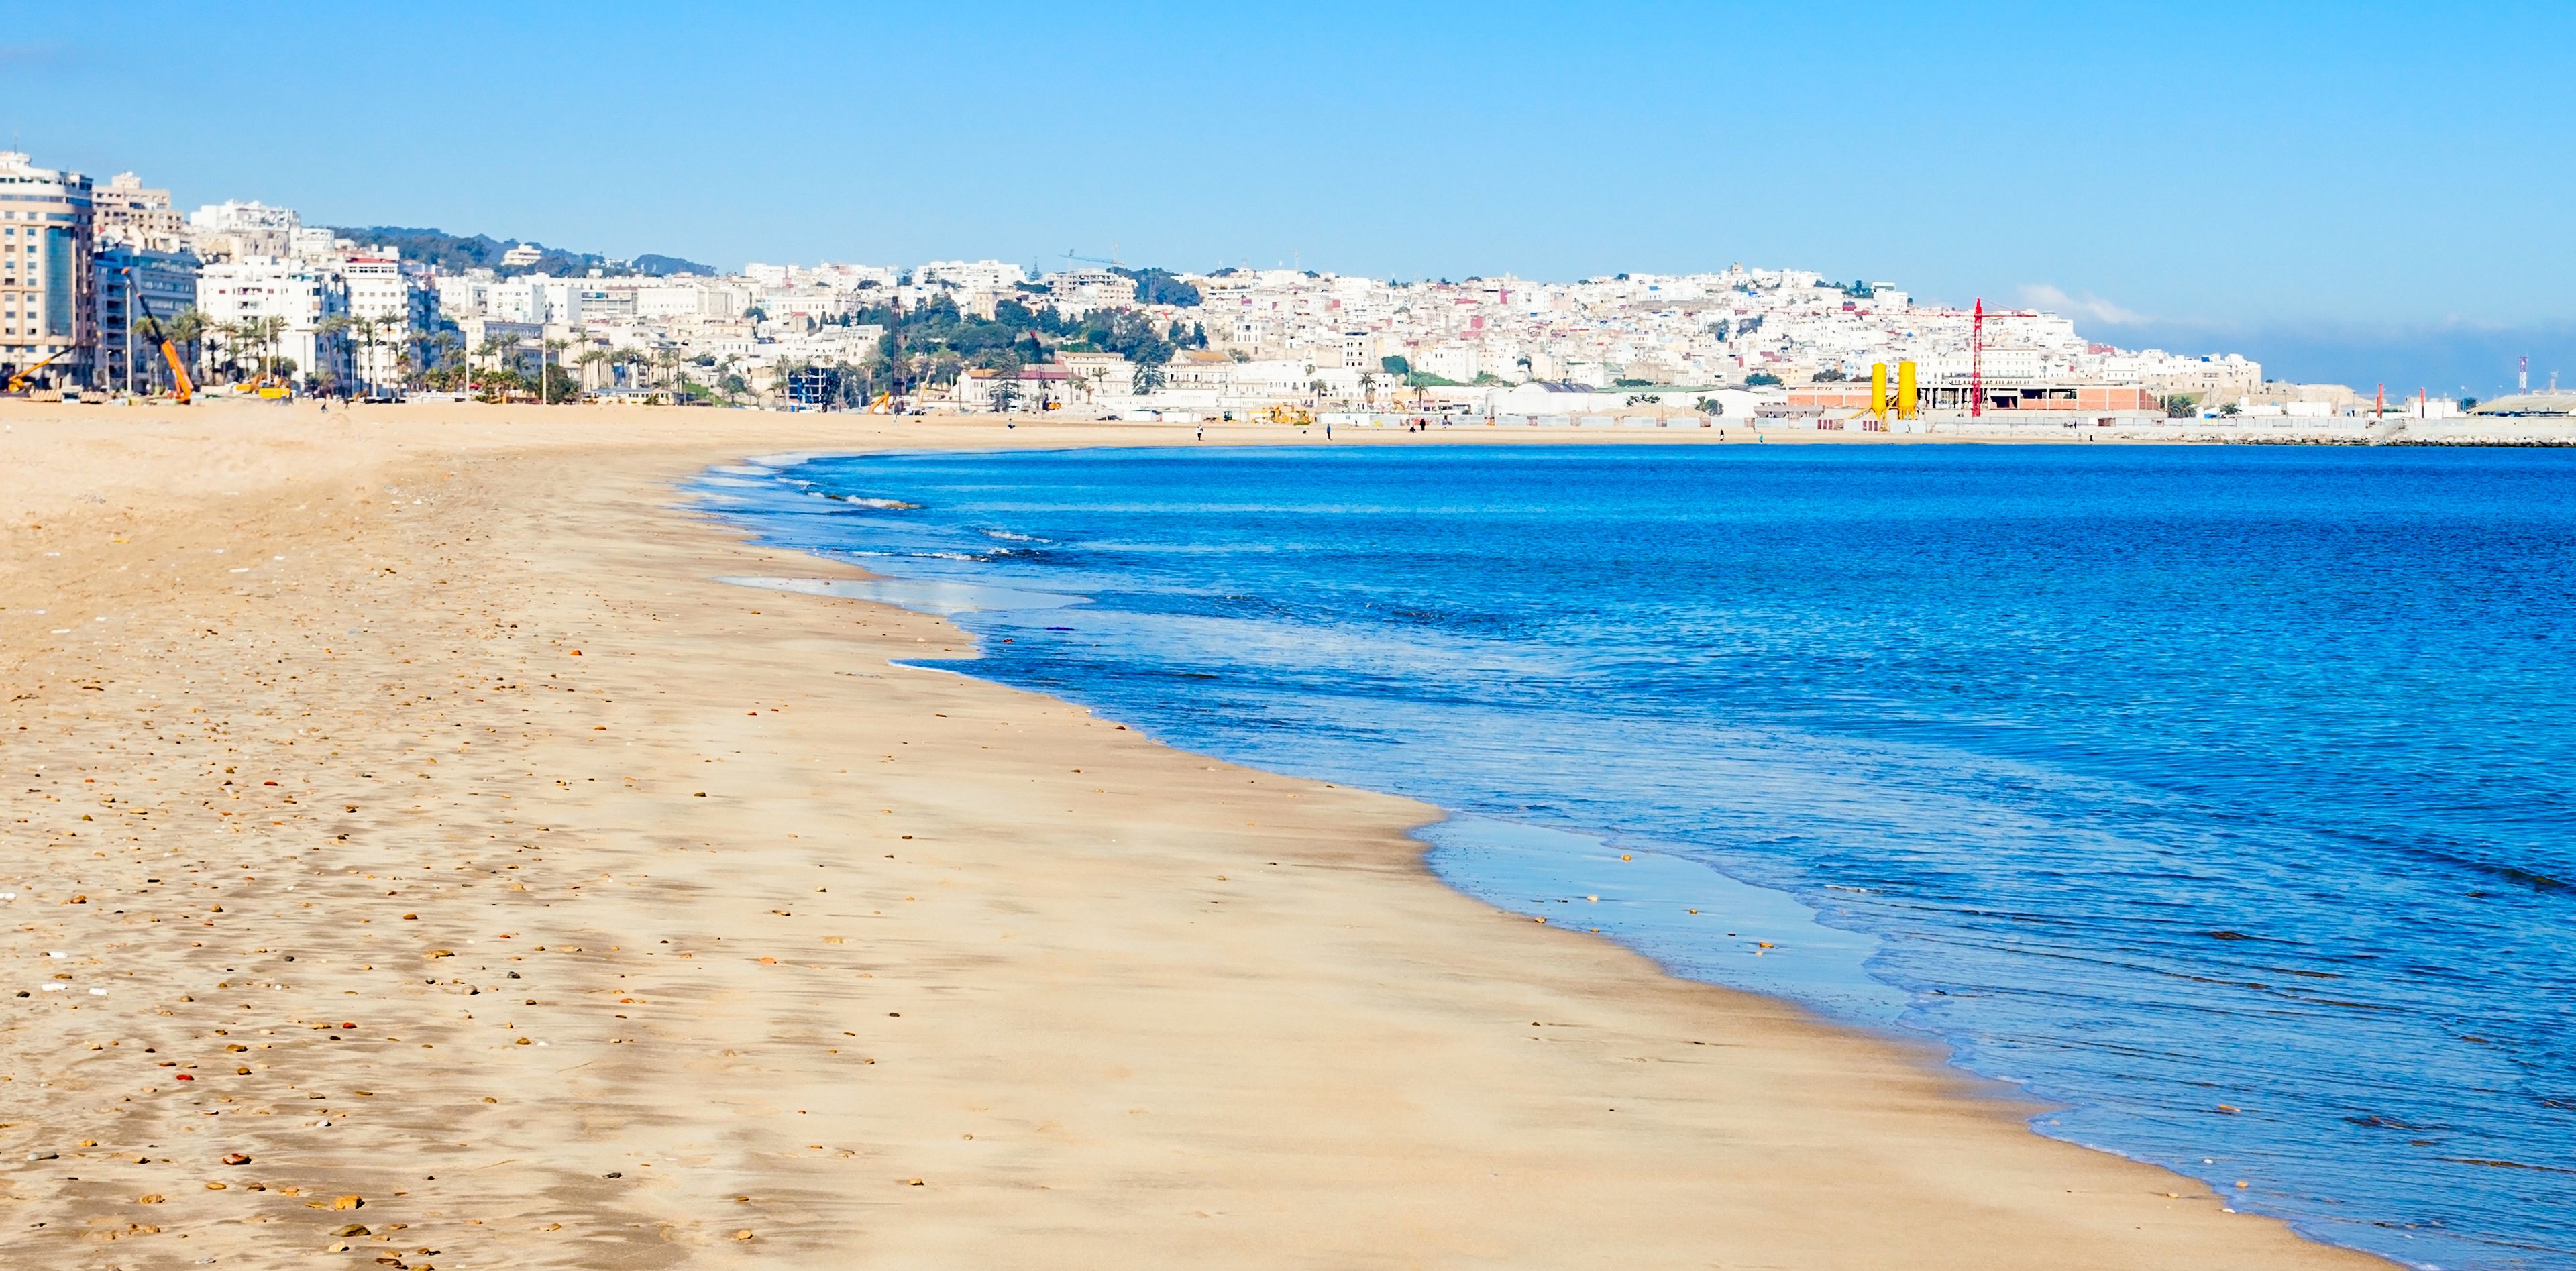 Strand von Tanger, Marokko